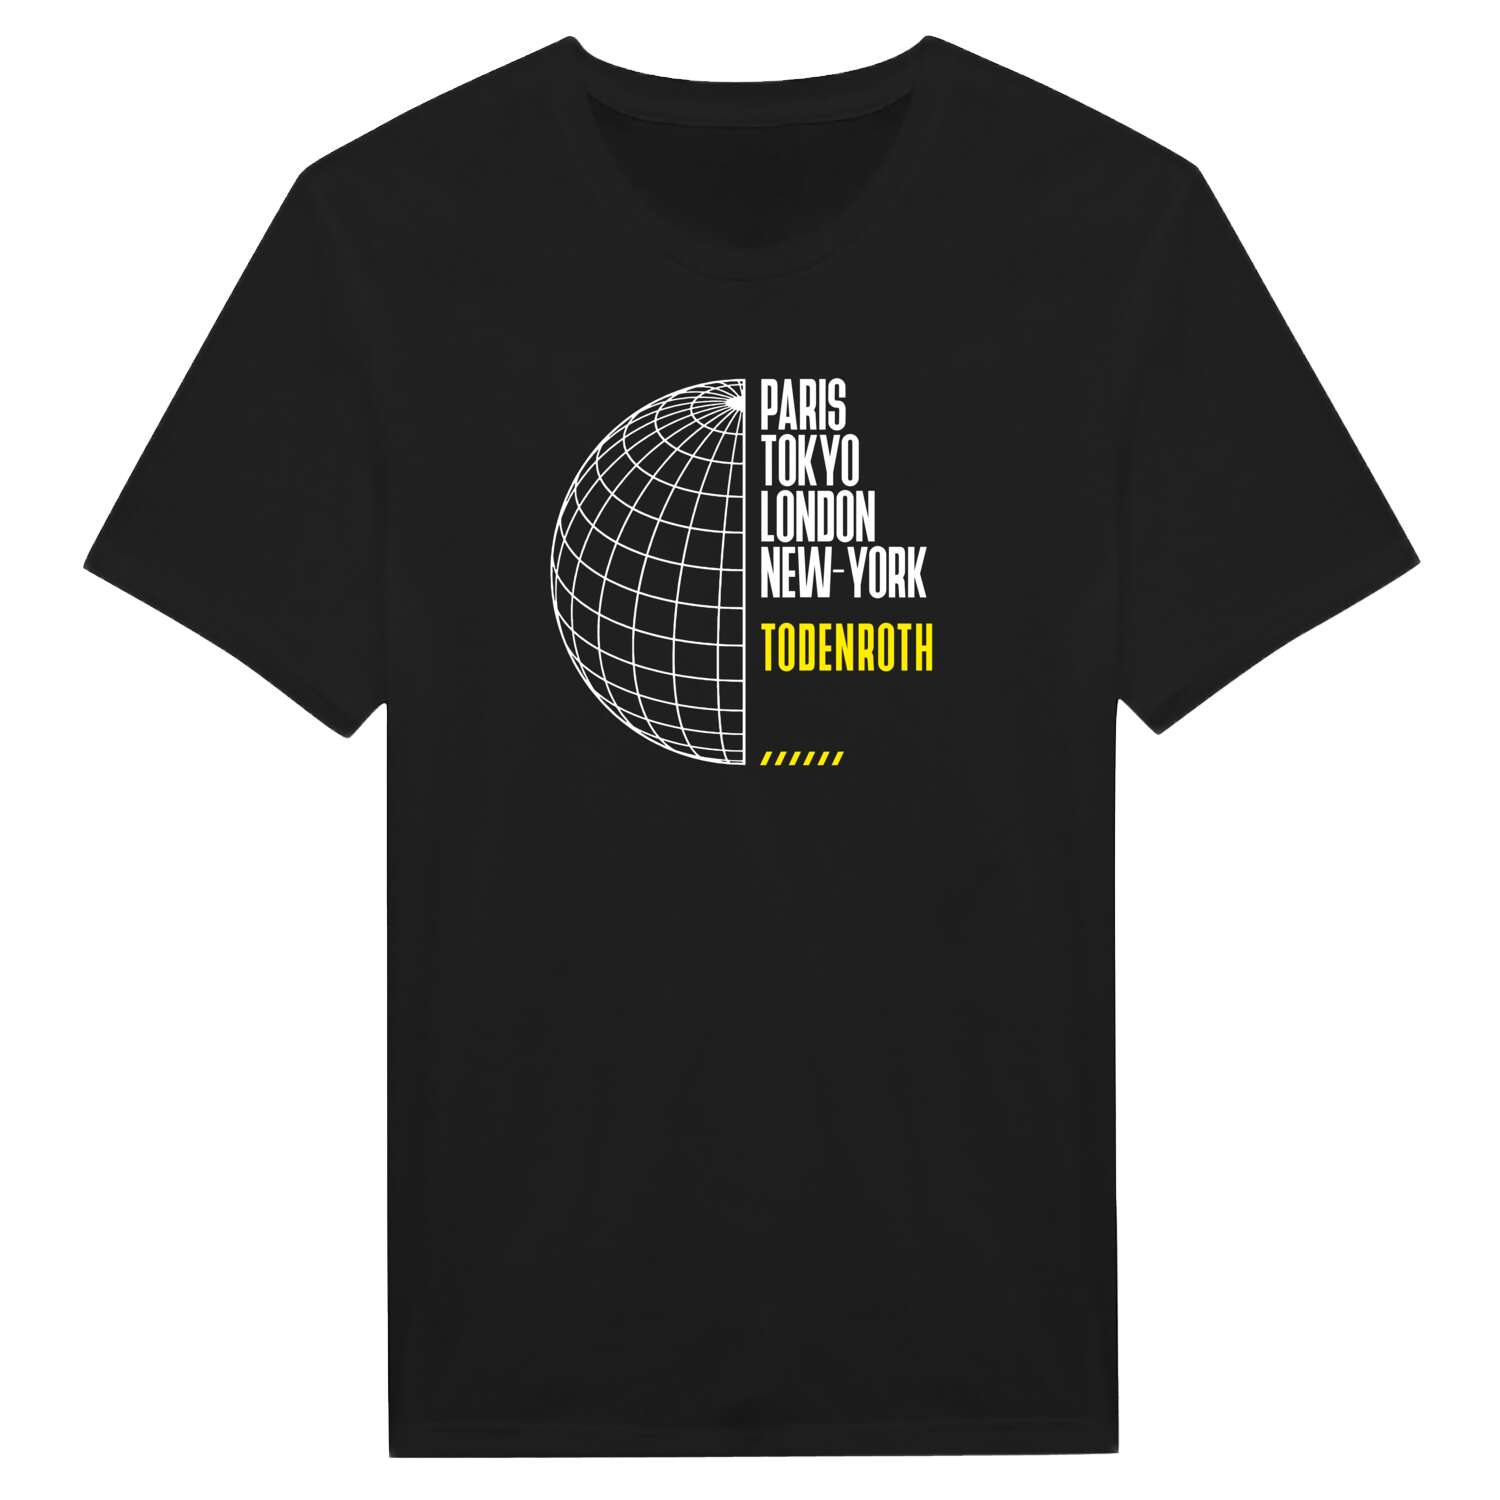 Todenroth T-Shirt »Paris Tokyo London«